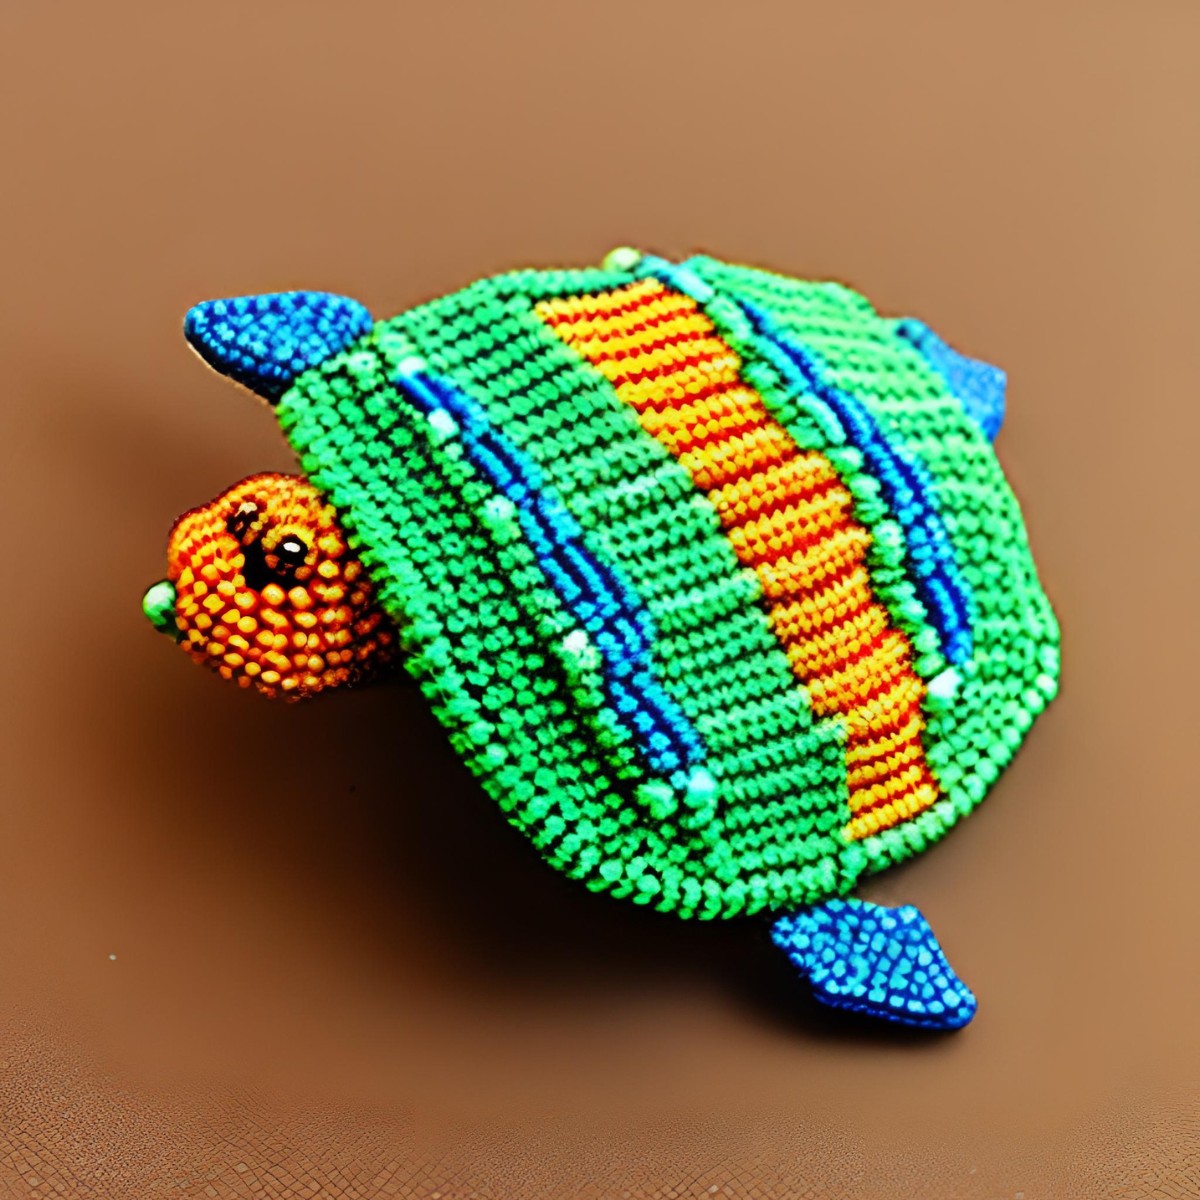 10 Turtle Perler Bead Patterns For TMNT Fans - DIY Crafts